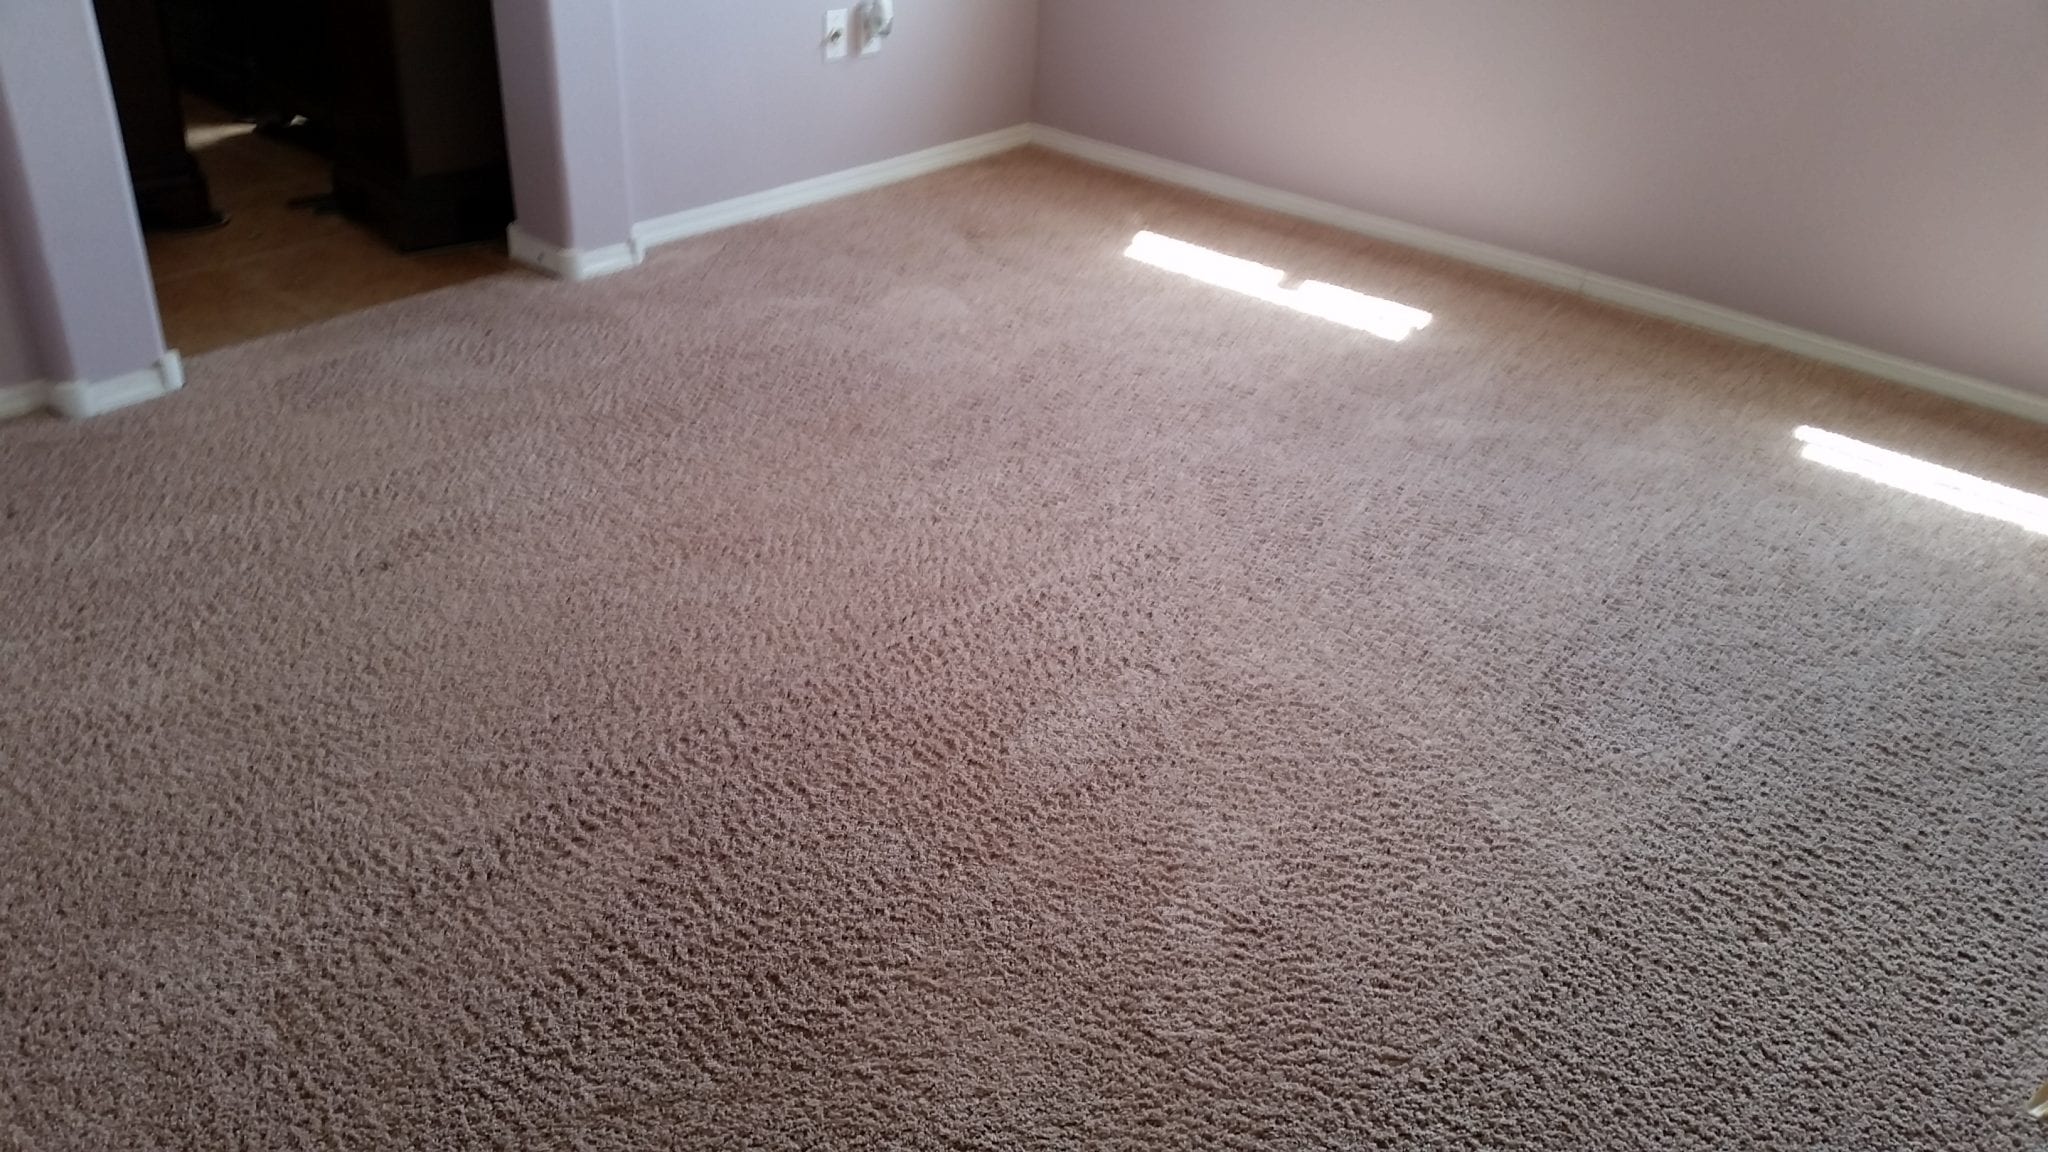 Albuquerque Carpet Restretch and Cleaning New Mexico Carpet Repair